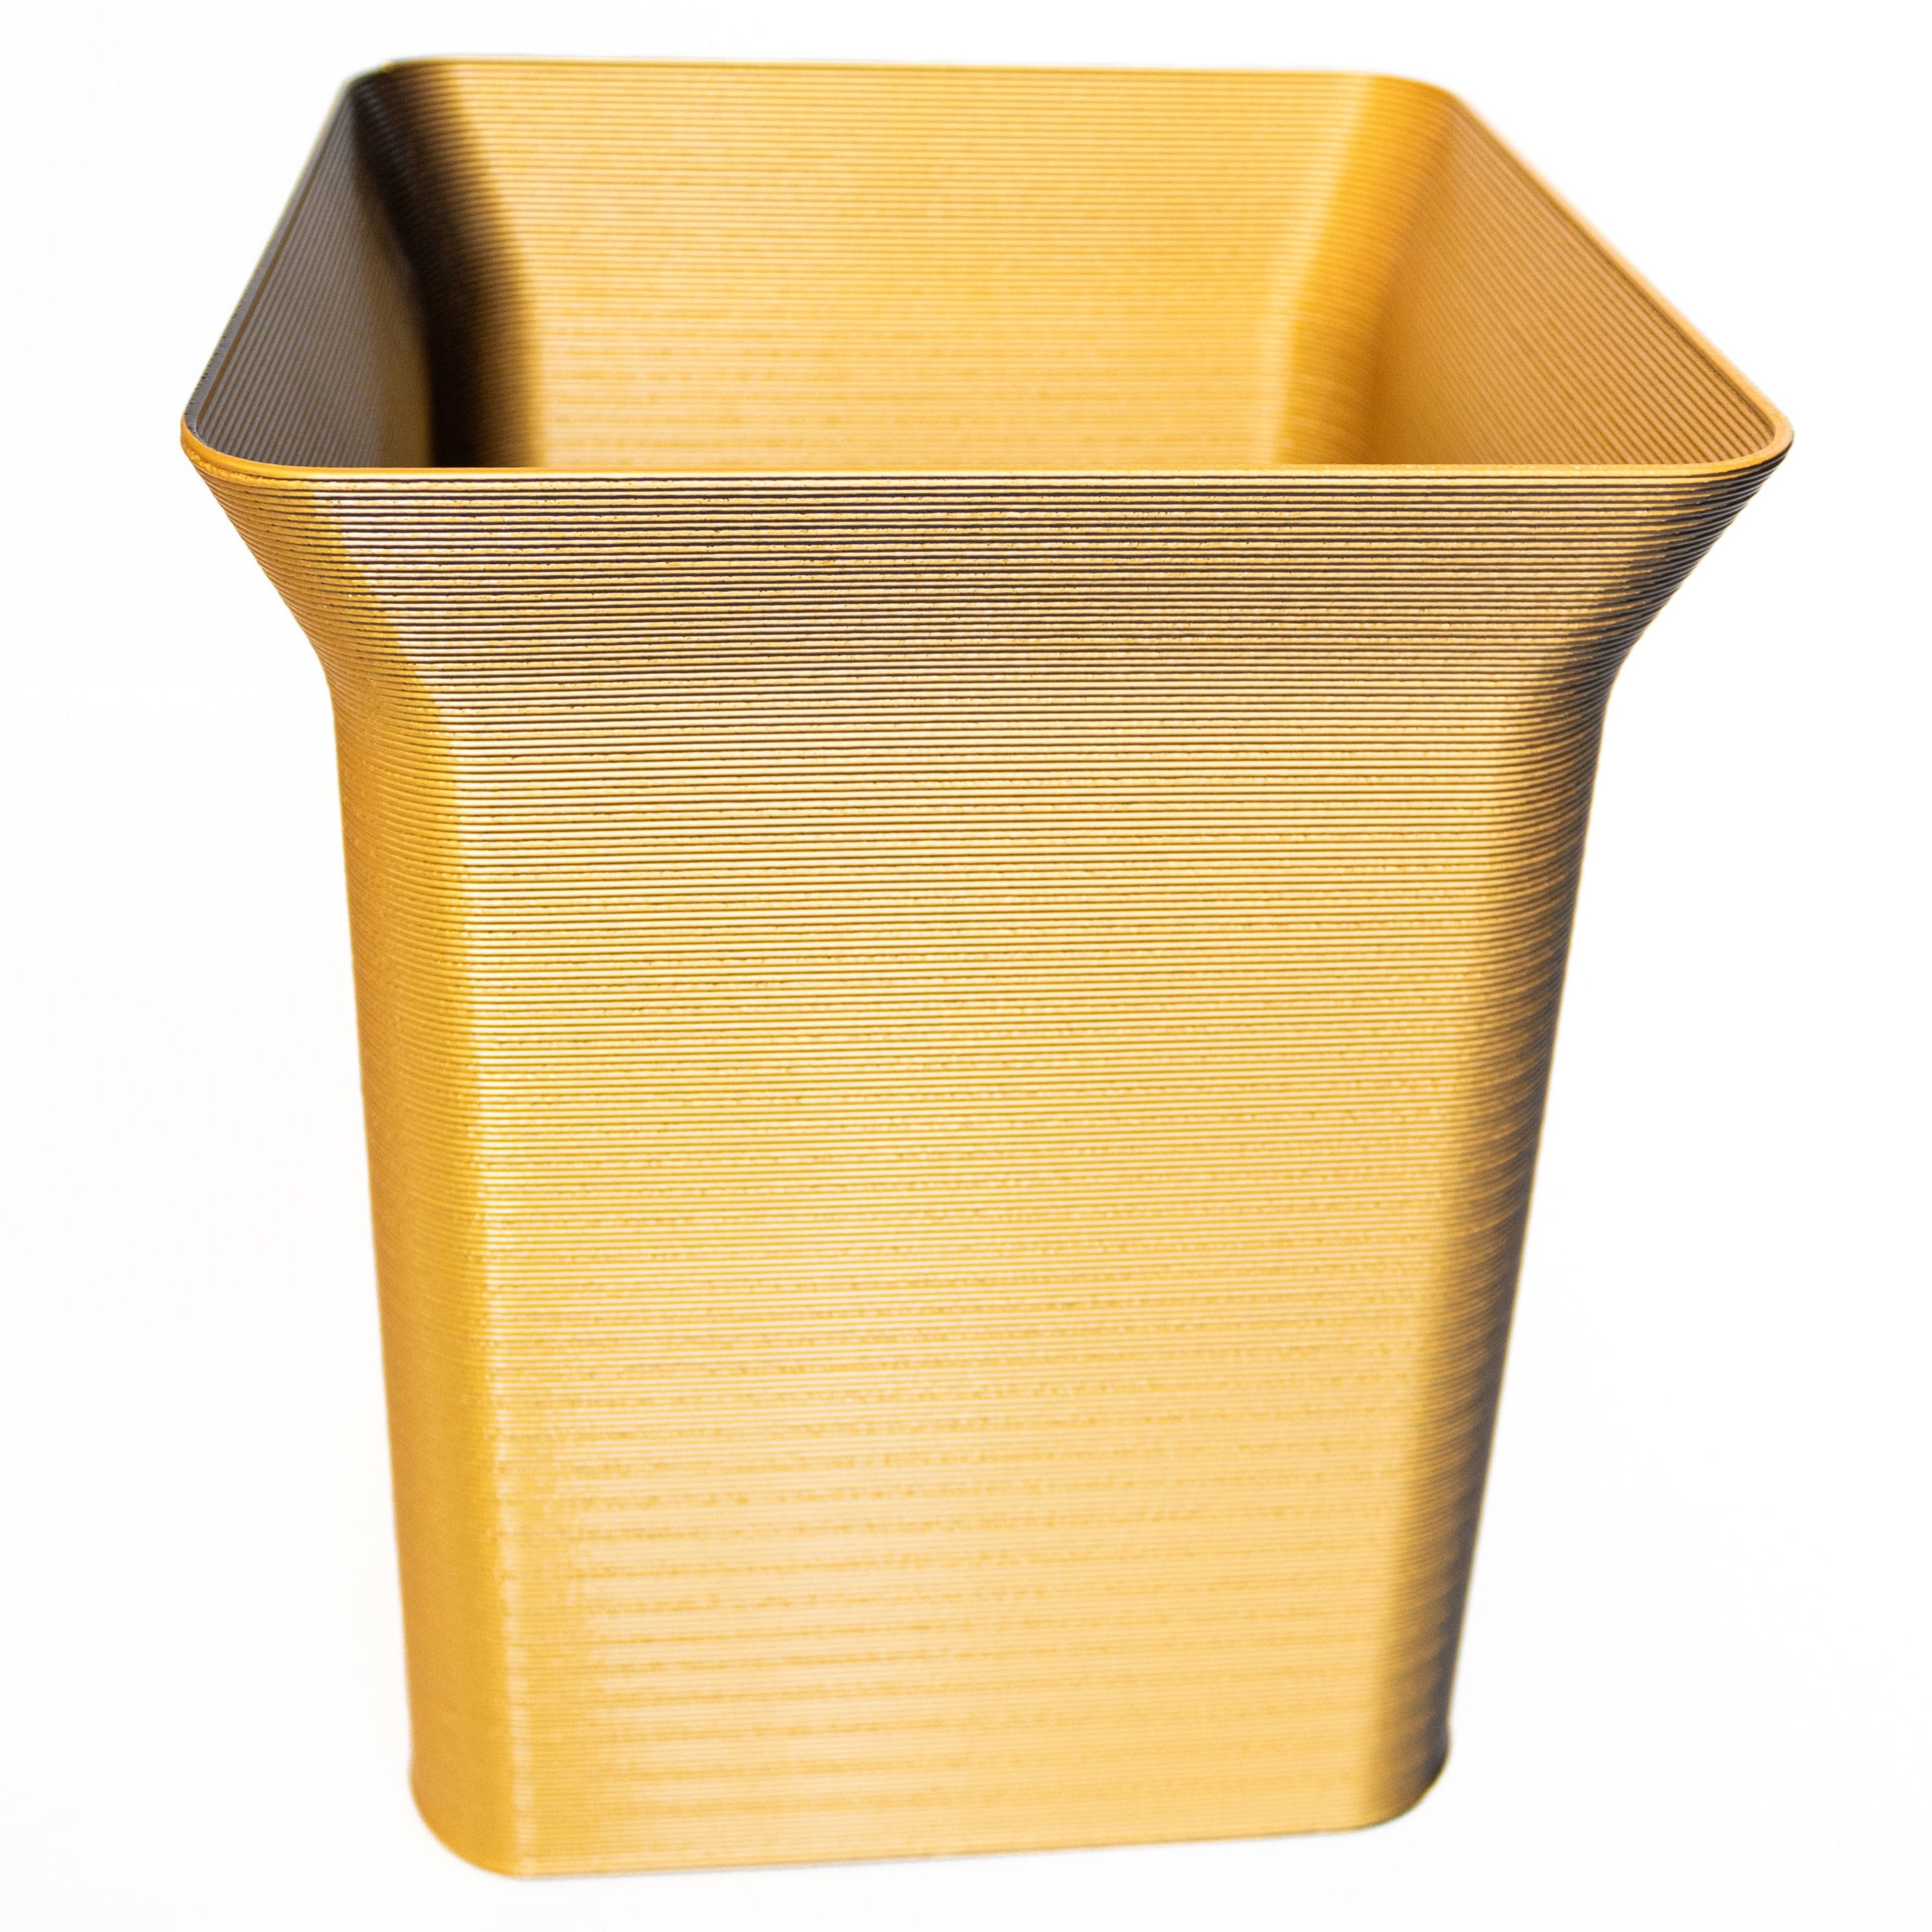 3D Waste basket Gold and Black Gradient